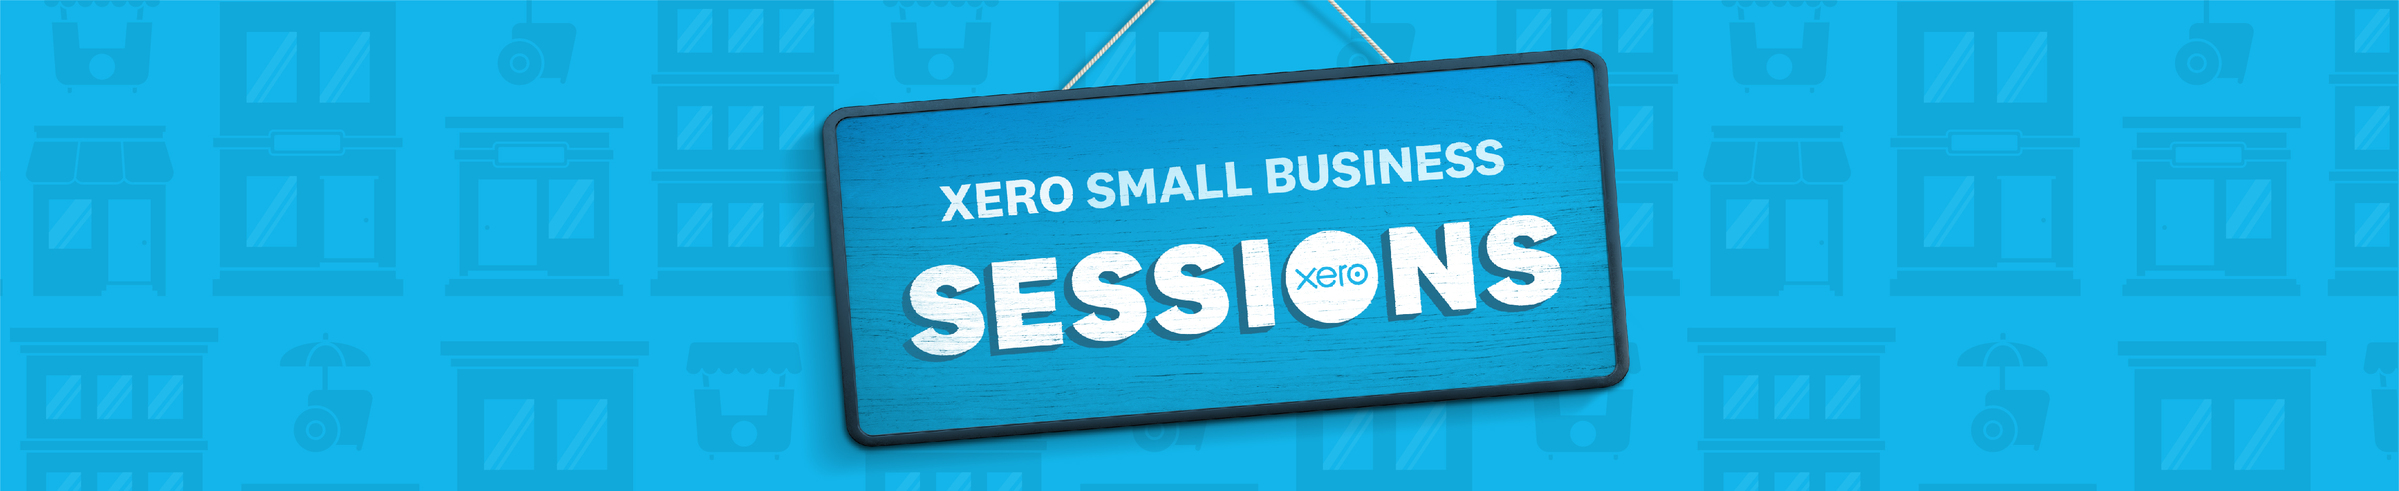 Xero Small Business Roadshow Evening